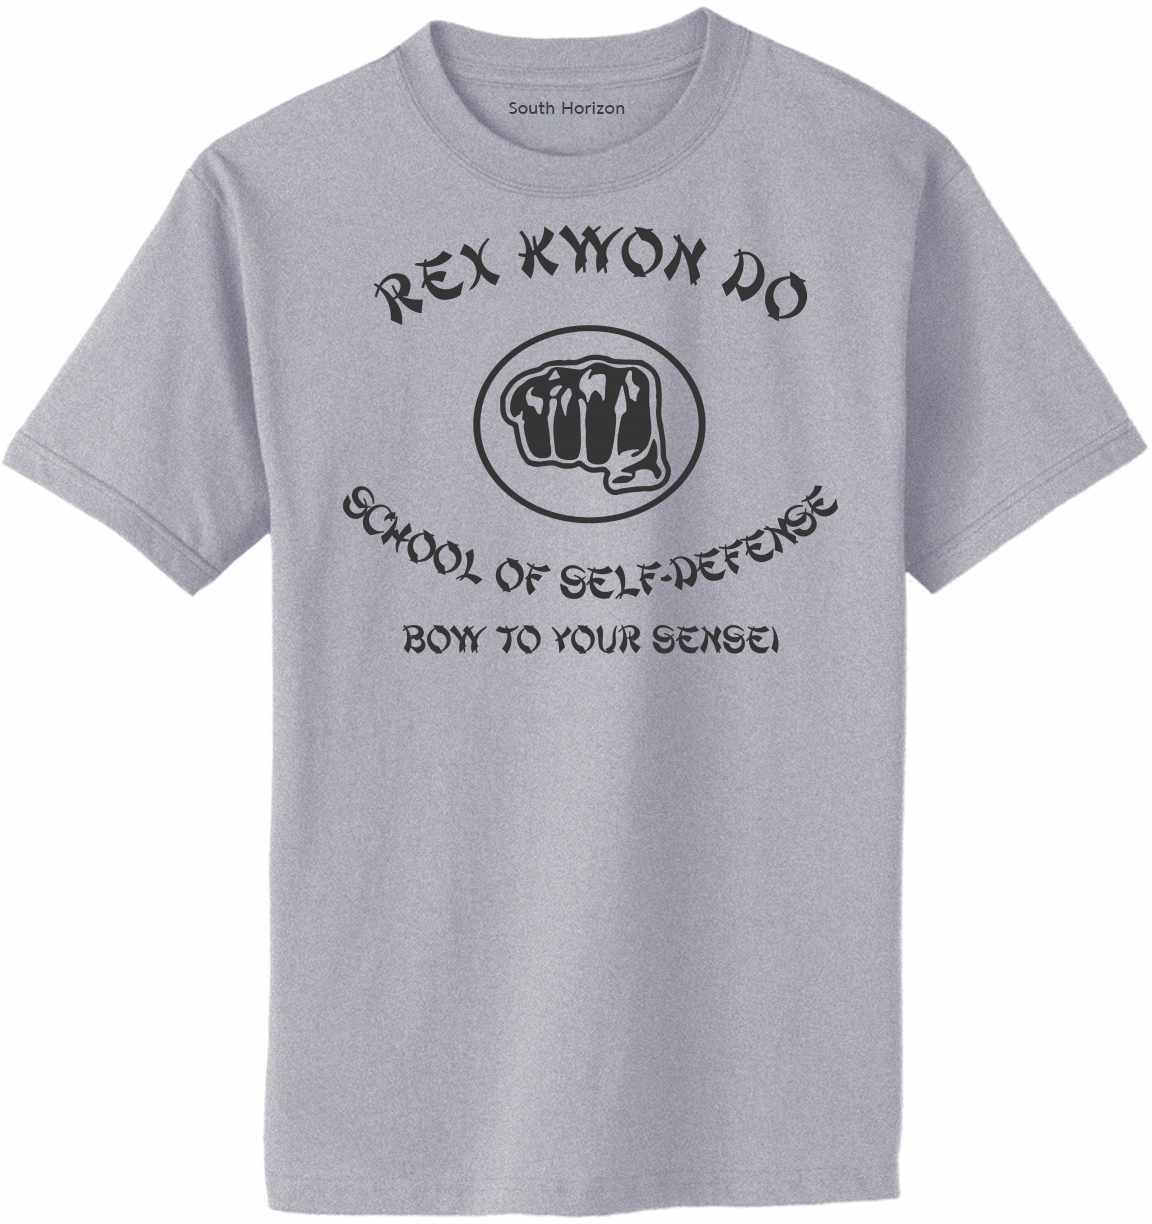 REX KWON DO SCHOOL OF SELF DEFENSE Adult T-Shirt (#386-1)